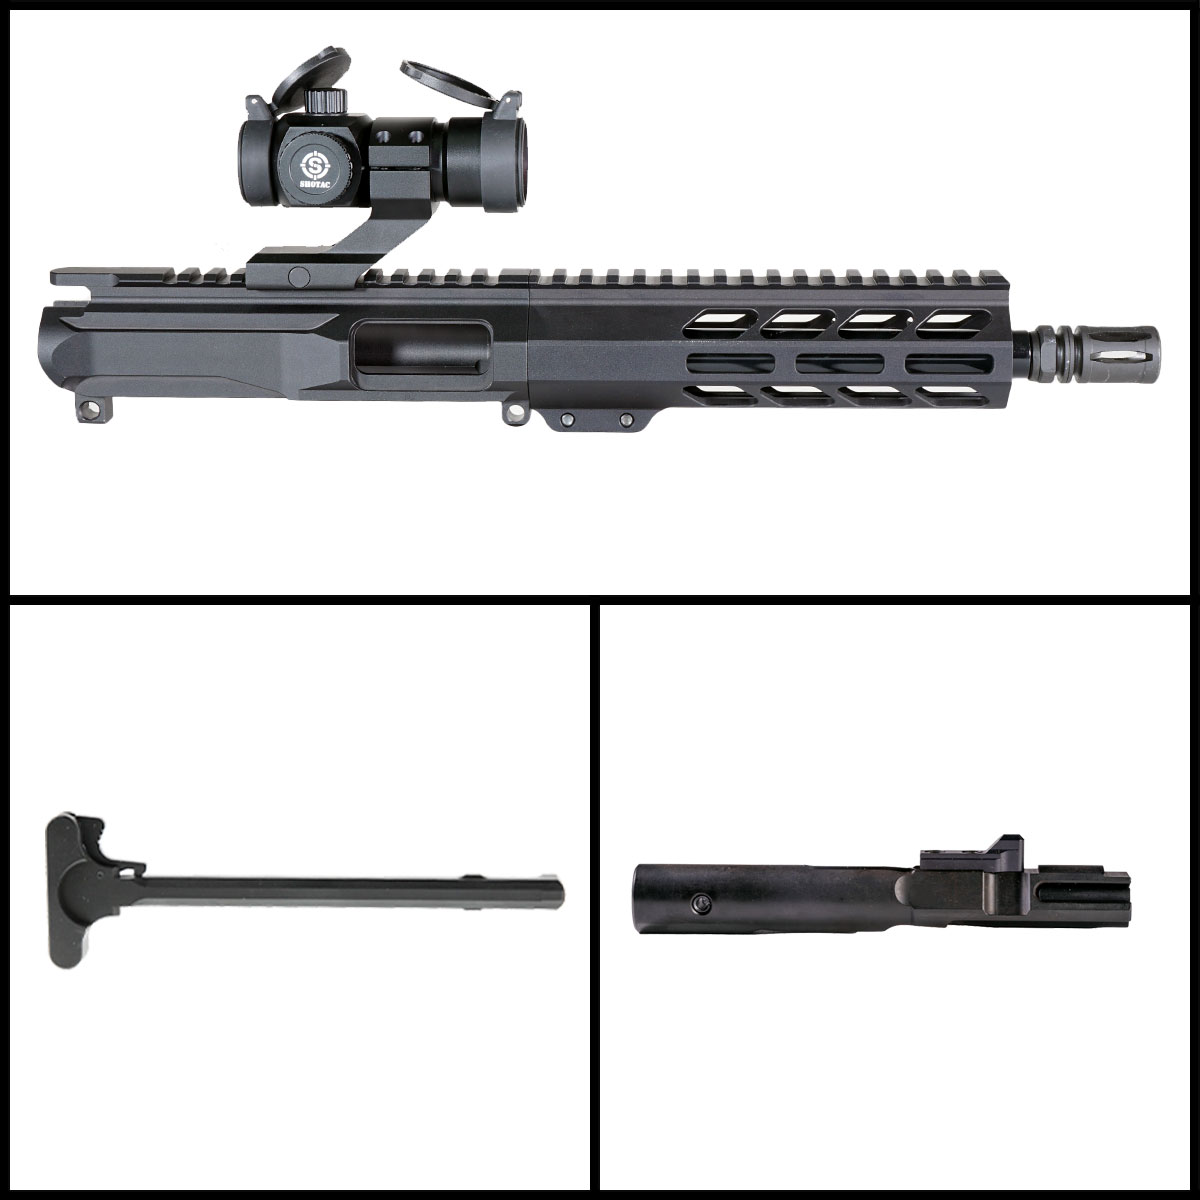 DDS 'Eternal Night Gen 2 w/ Shotac Cantilever' 8.5-inch AR-15 9mm Nitride Pistol Complete Upper Build Kit